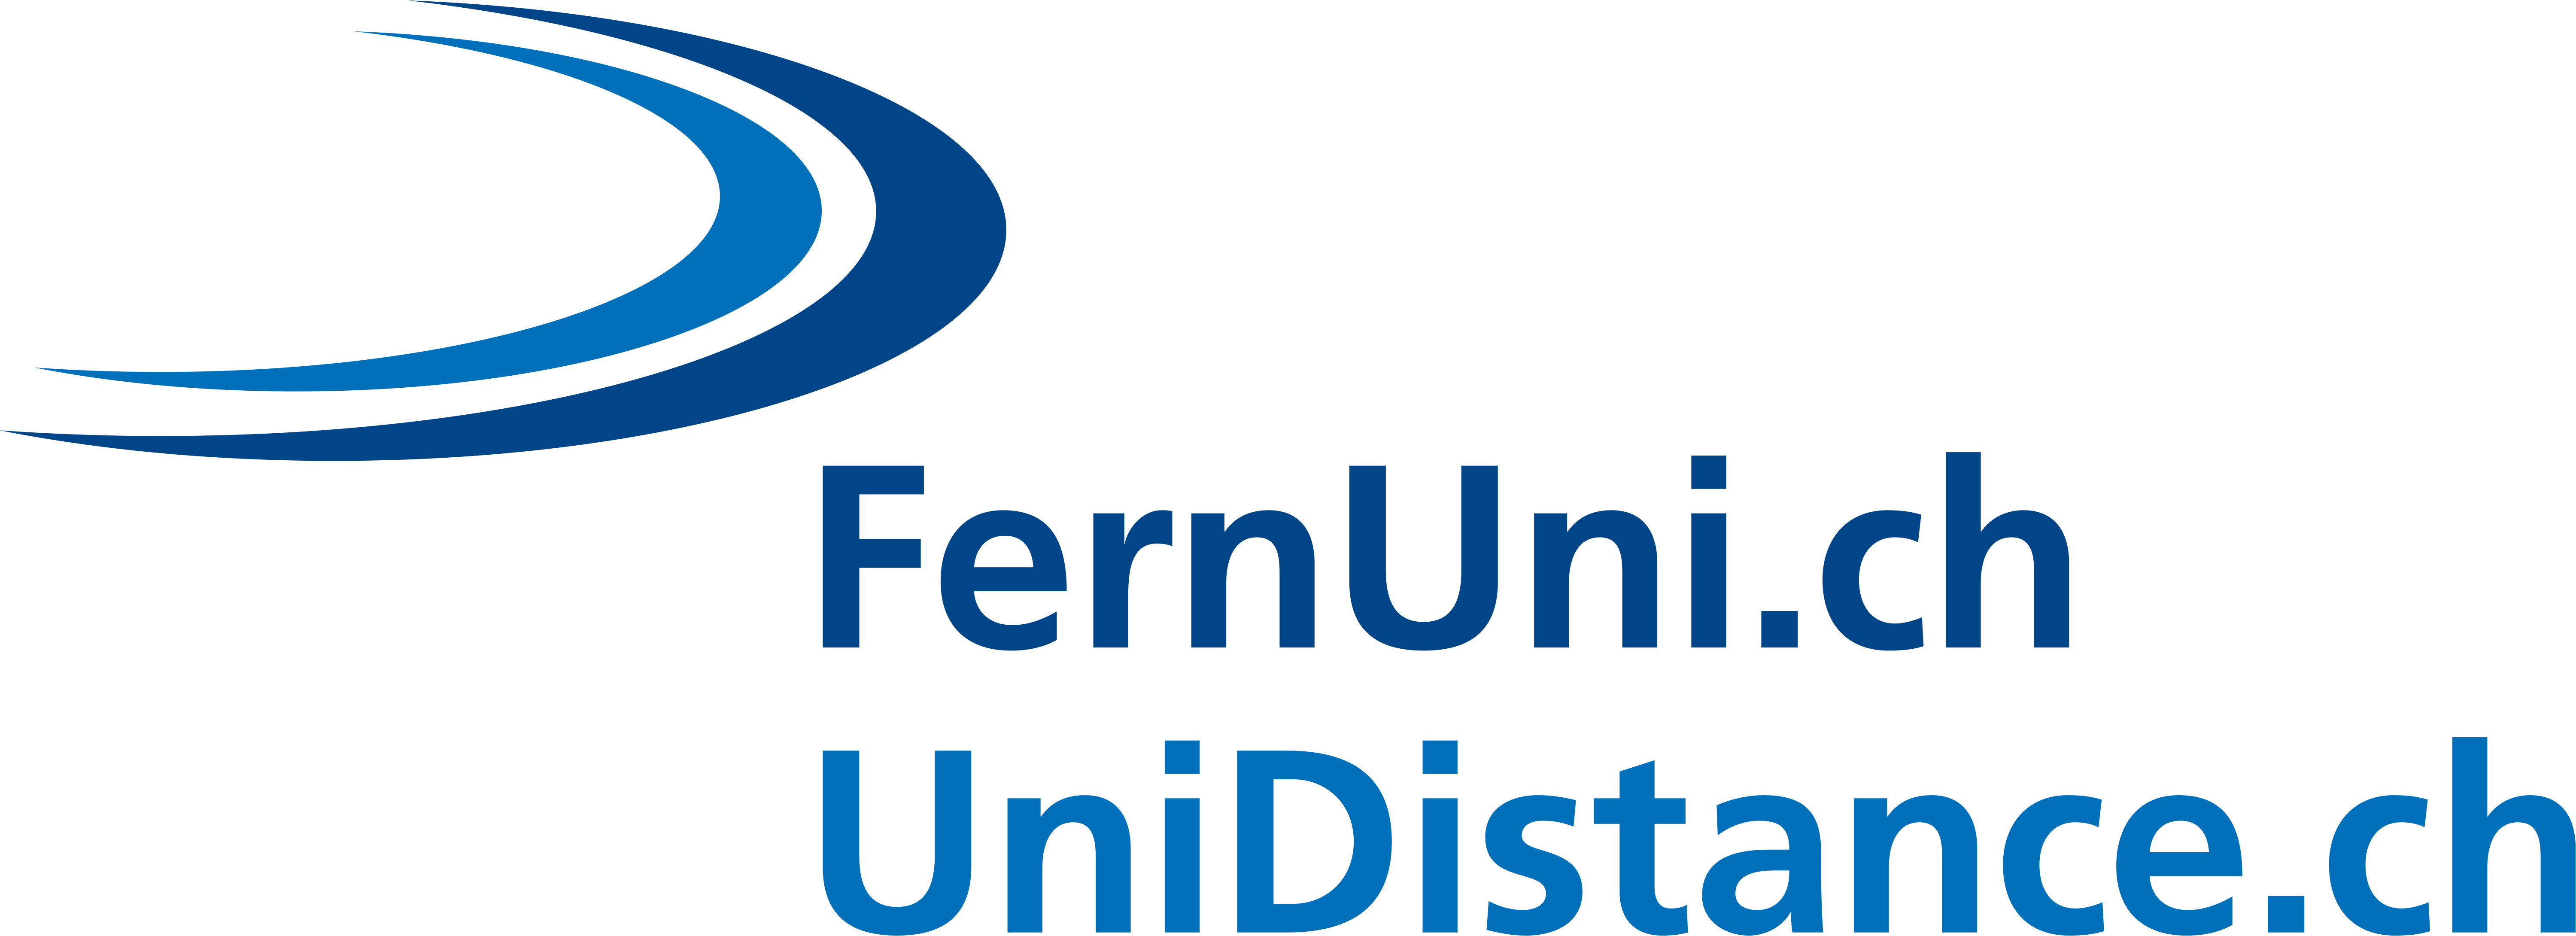 Logo_FernUniDistance.jpg